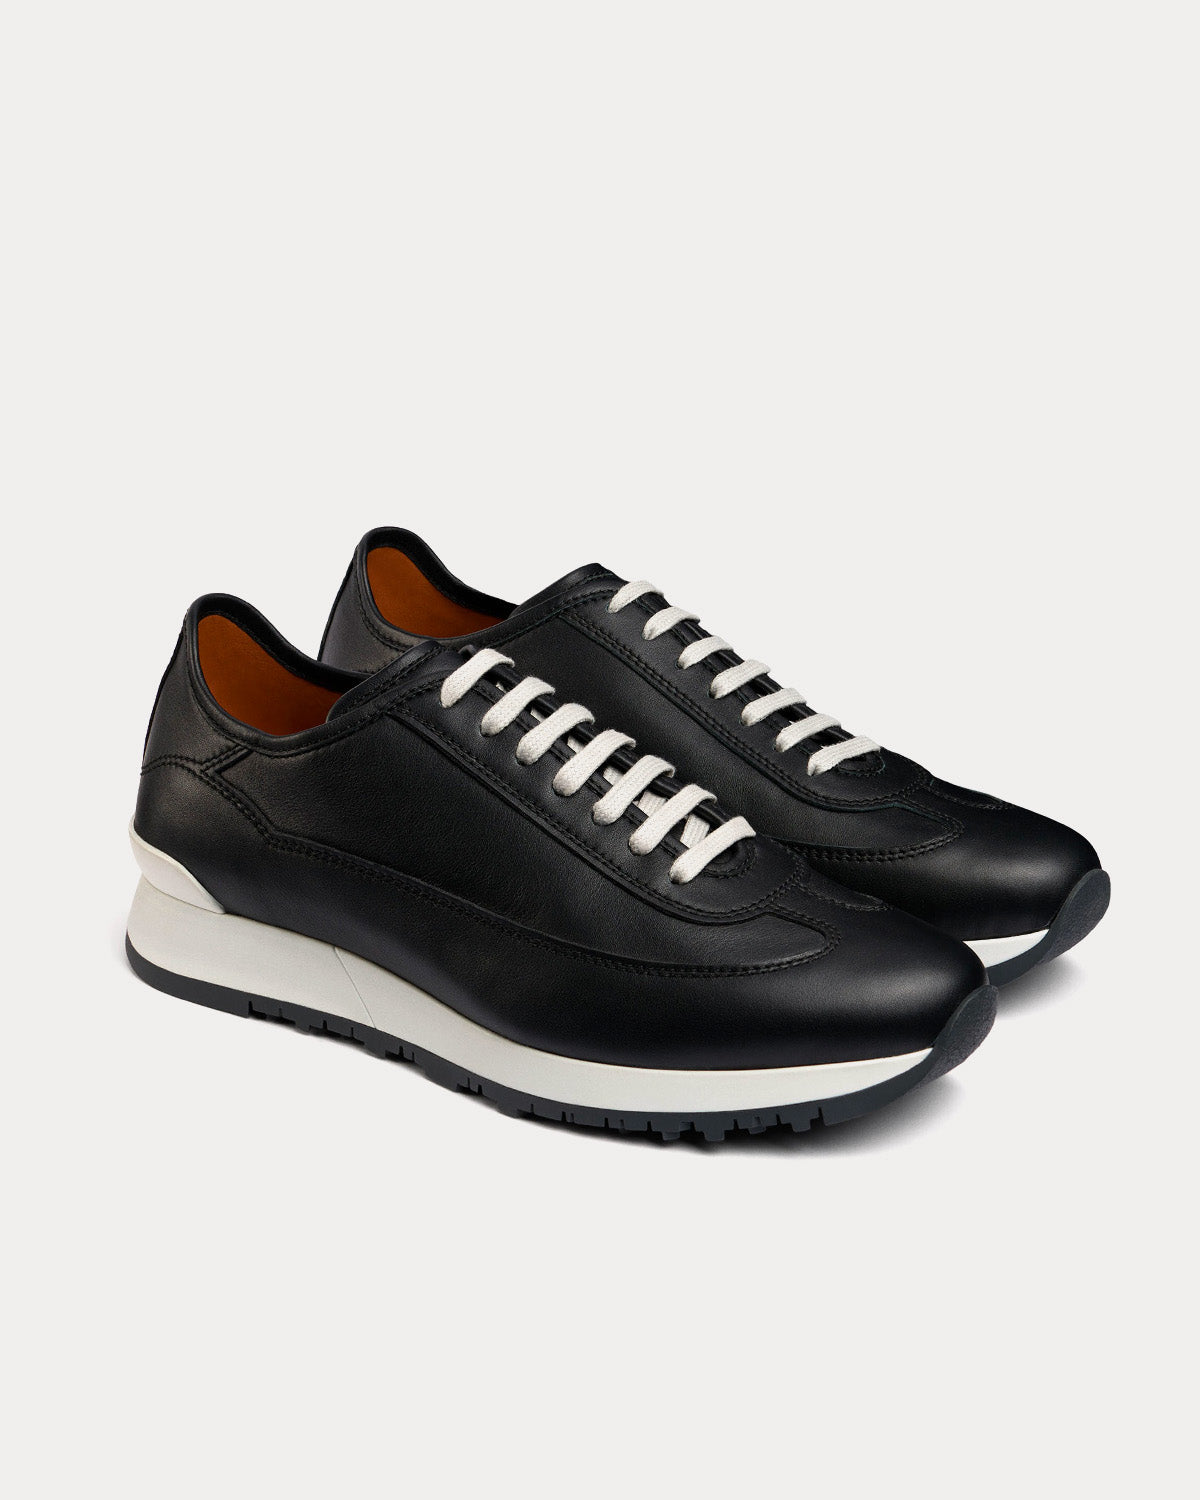 John Lobb - Foundry II Natural Calf Leather Black Low Top Sneakers